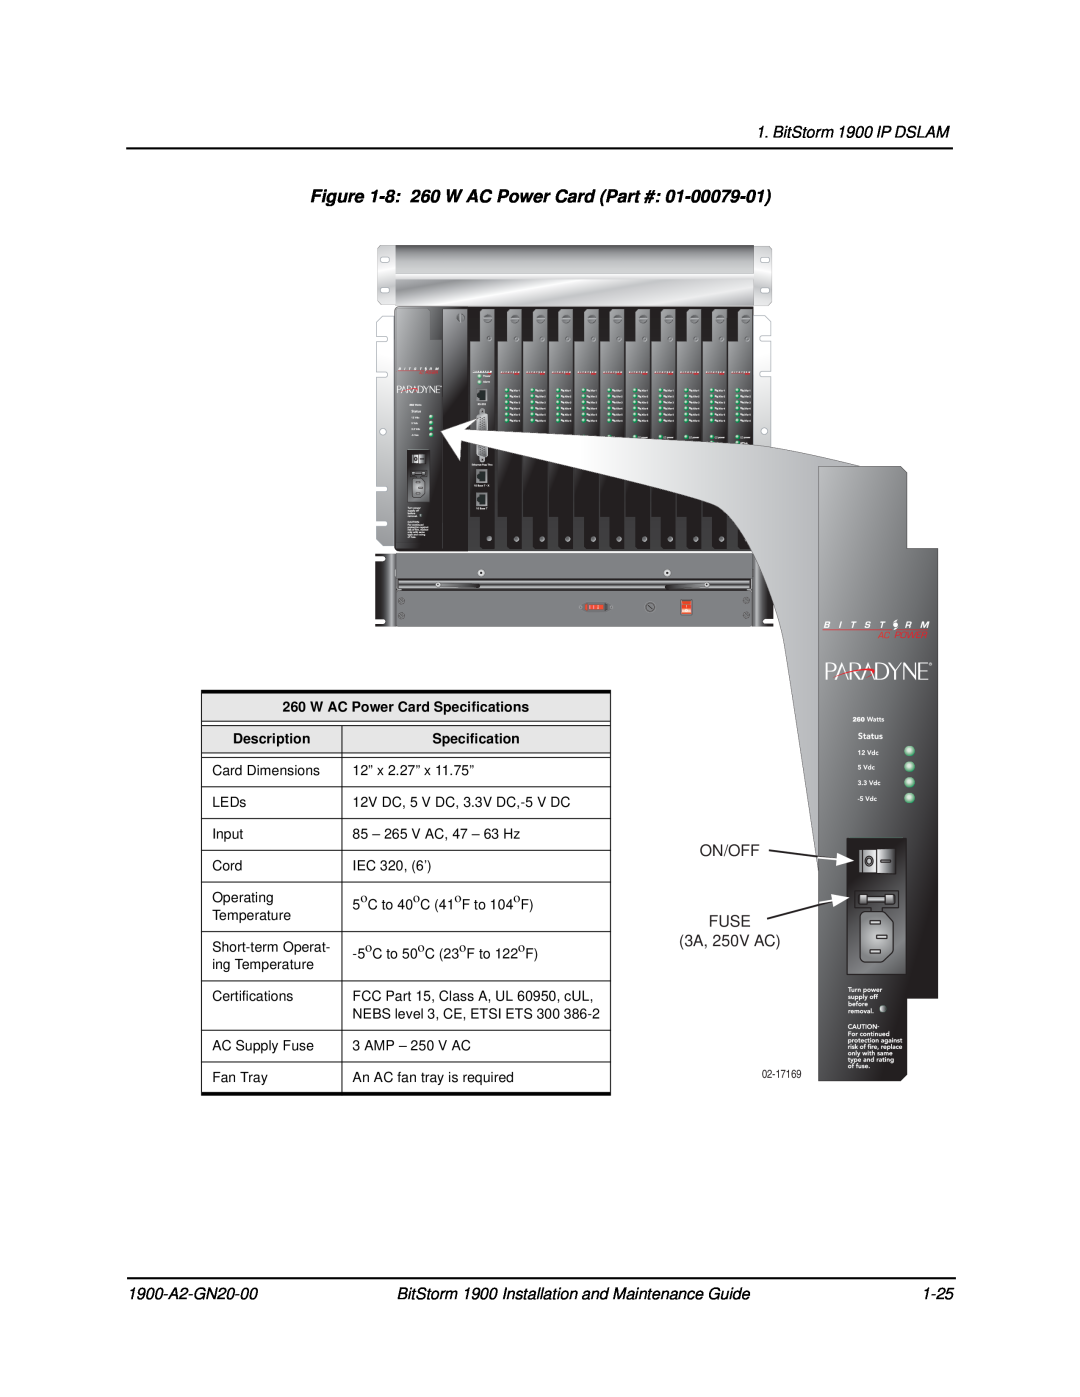 Paradyne 8 260 W AC Power Card, BitStorm 1900 IP DSLAM, ON/OFF FUSE 3A, 250V AC, 1900-A2-GN20-00, 1-25, Description 